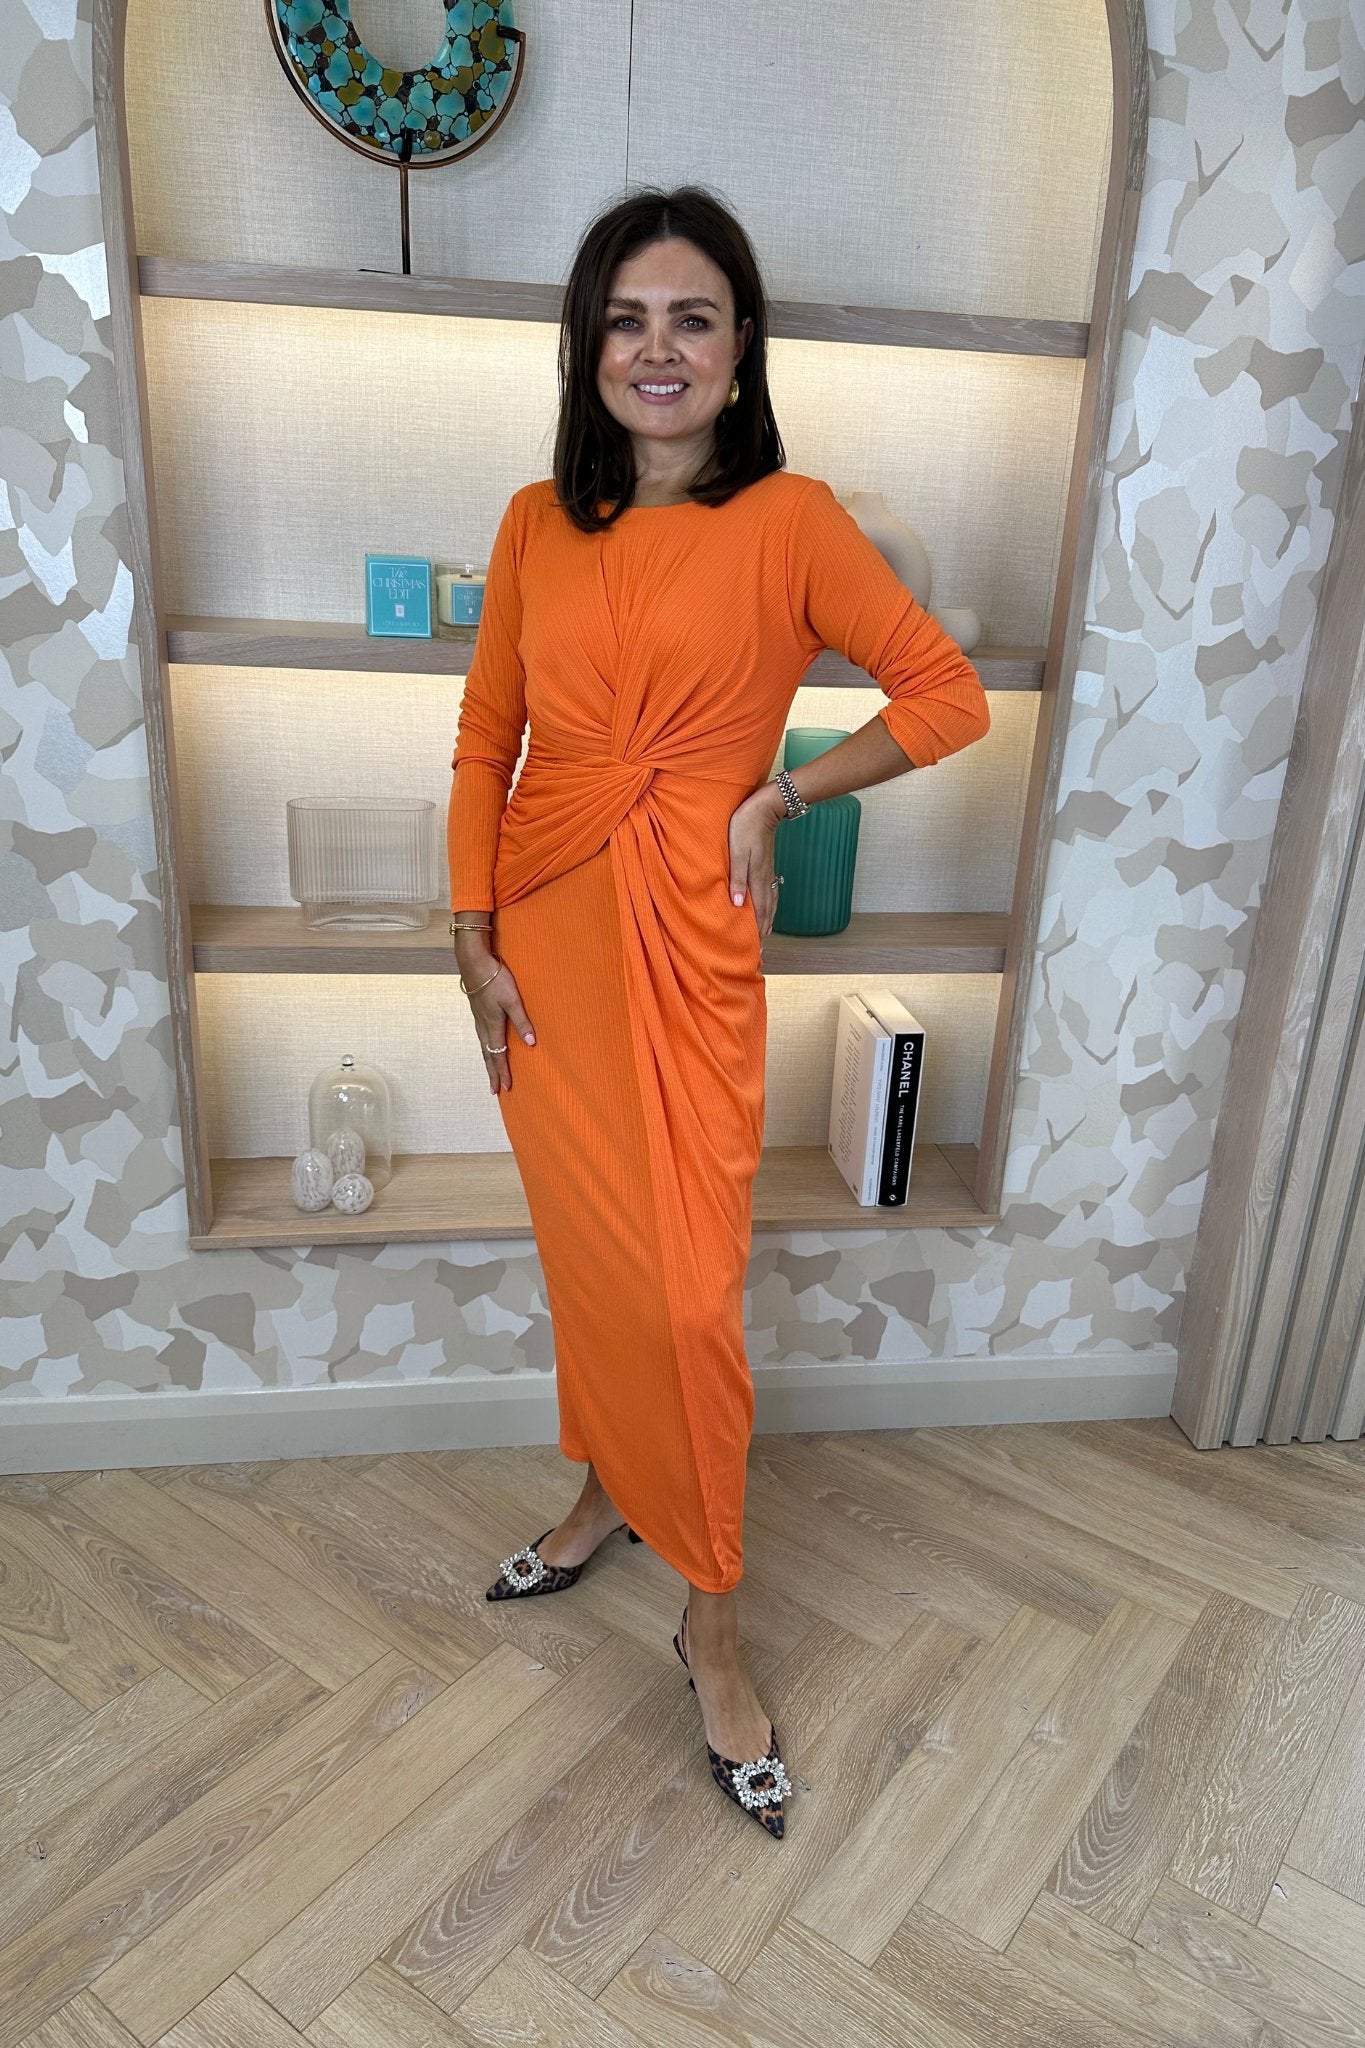 Kelly Knot Front Midi Dress In Orange - The Walk in Wardrobe